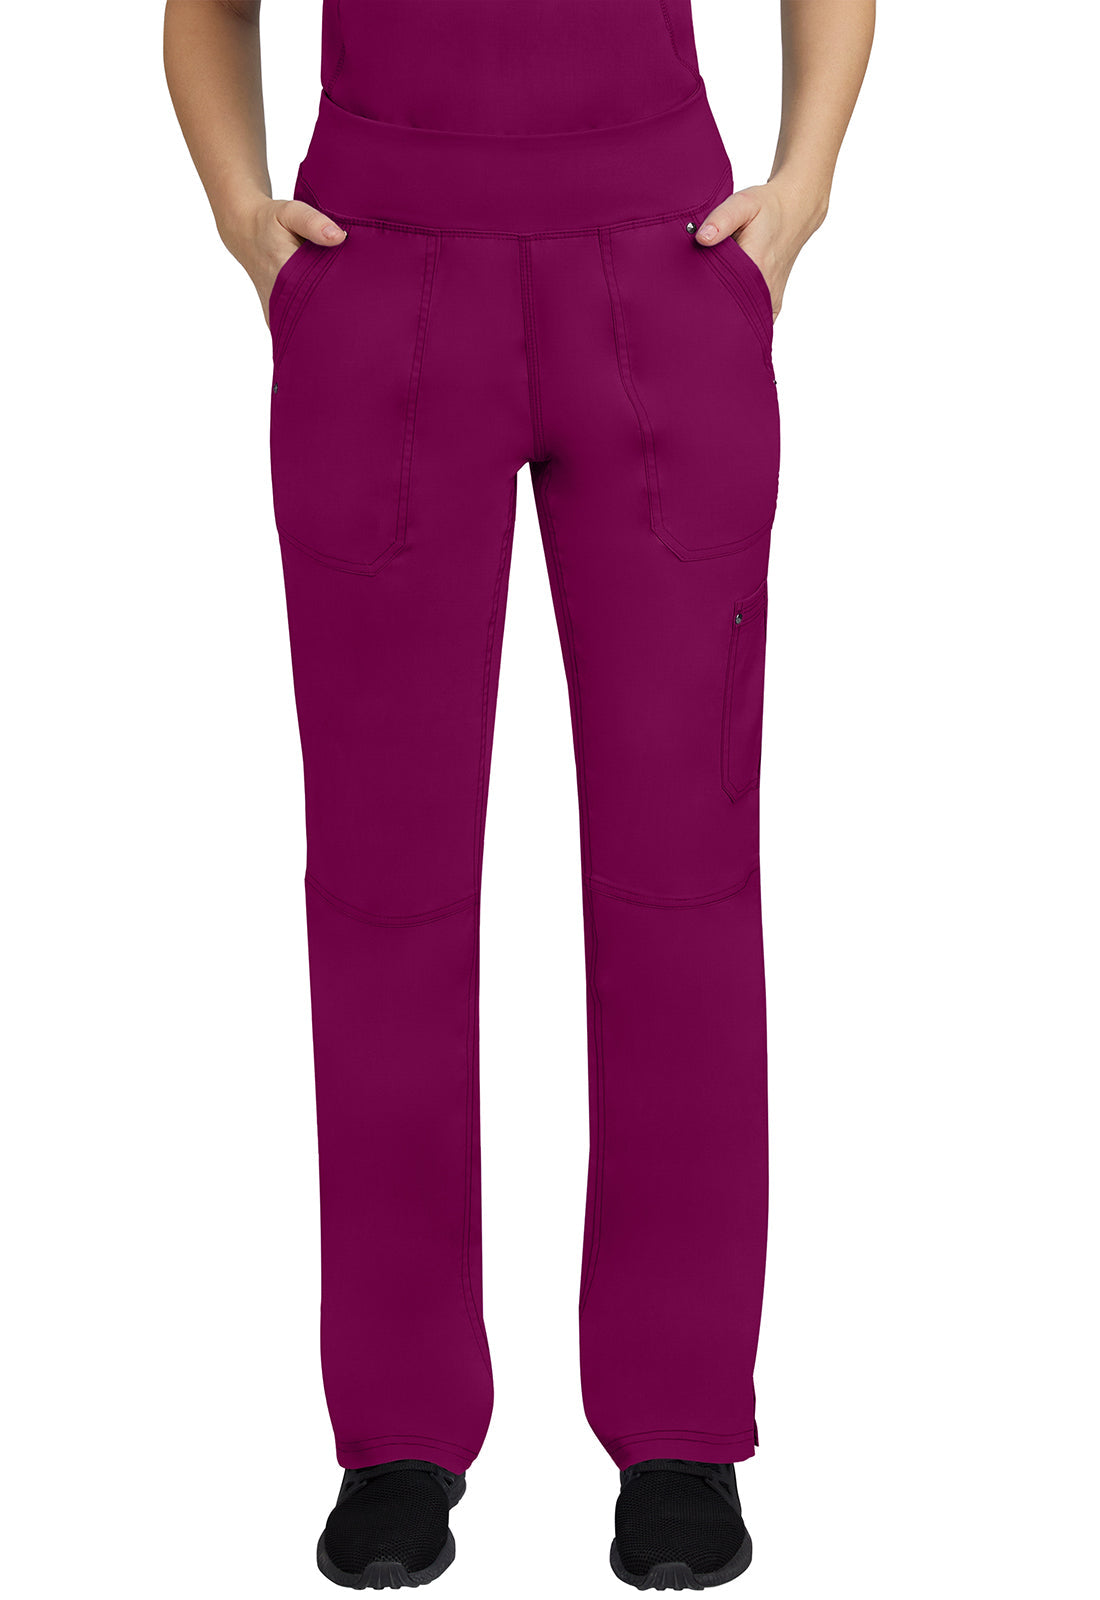 Healing Hands Purple Label Tori Yoga Pants (Petite Up to XL) – Berani Femme  Couture Scrubwear & Medical Supply